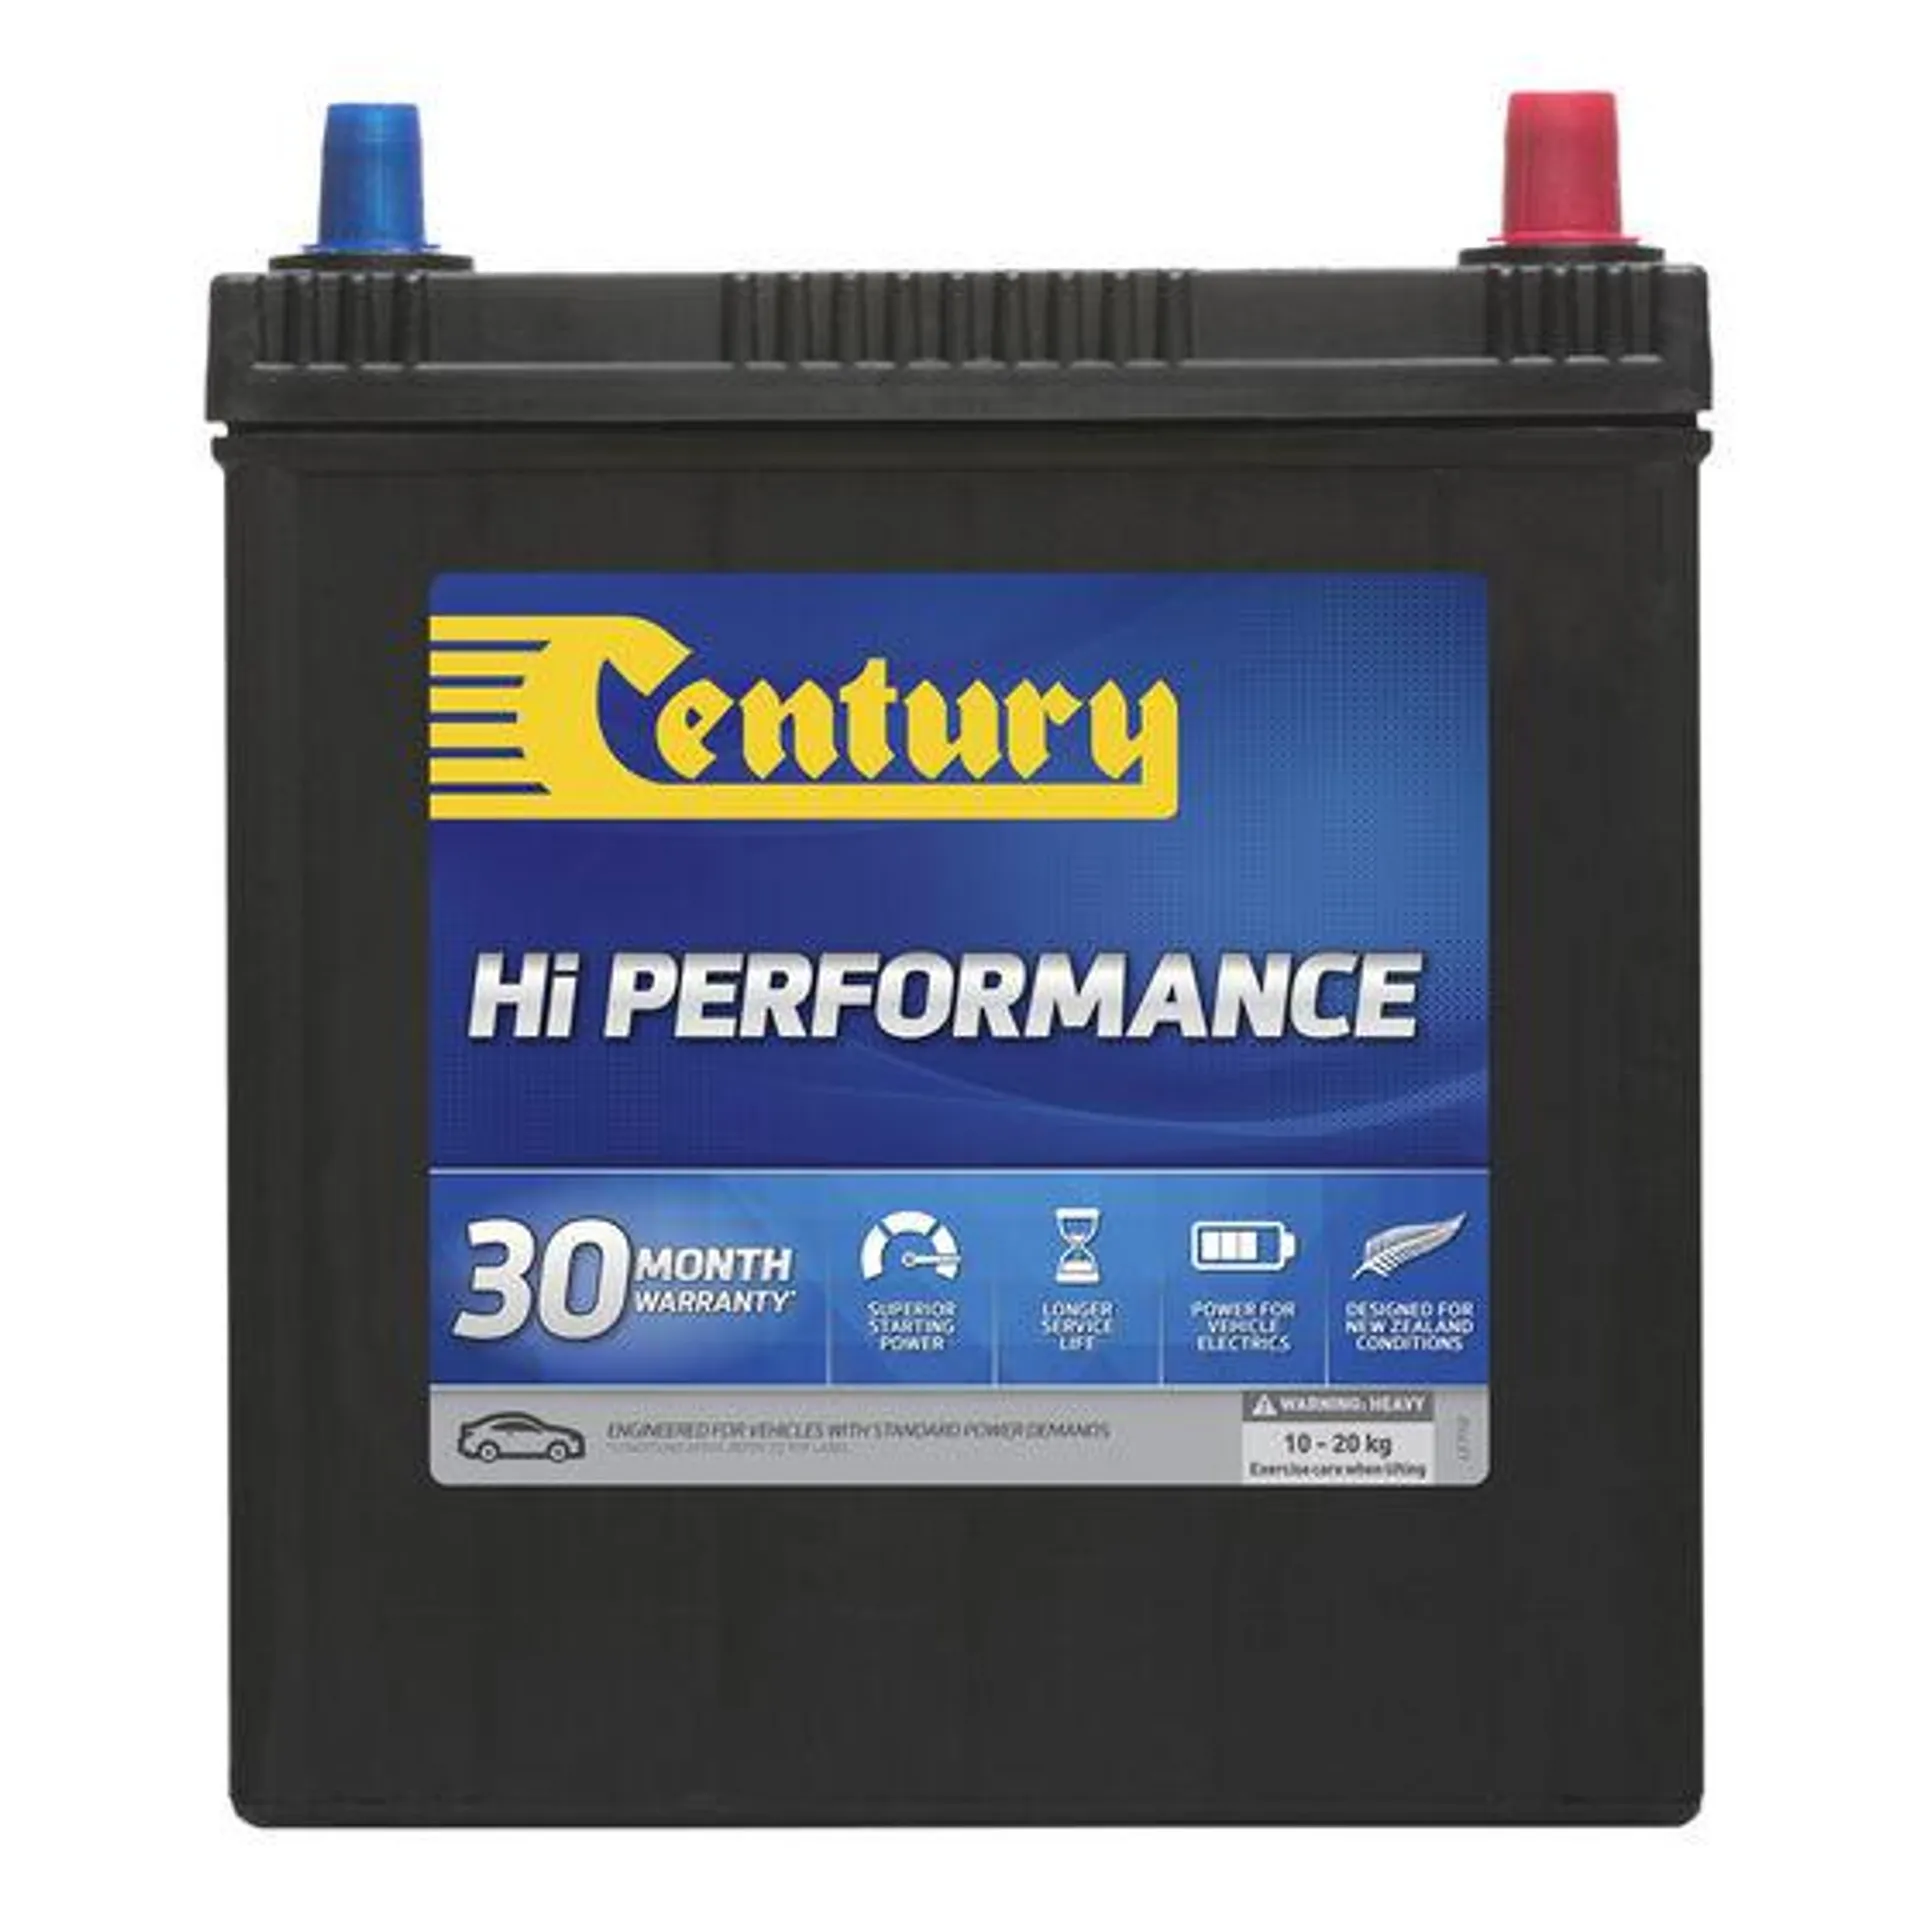 Century High Performance Car Battery NS40ZL MF 330CCA